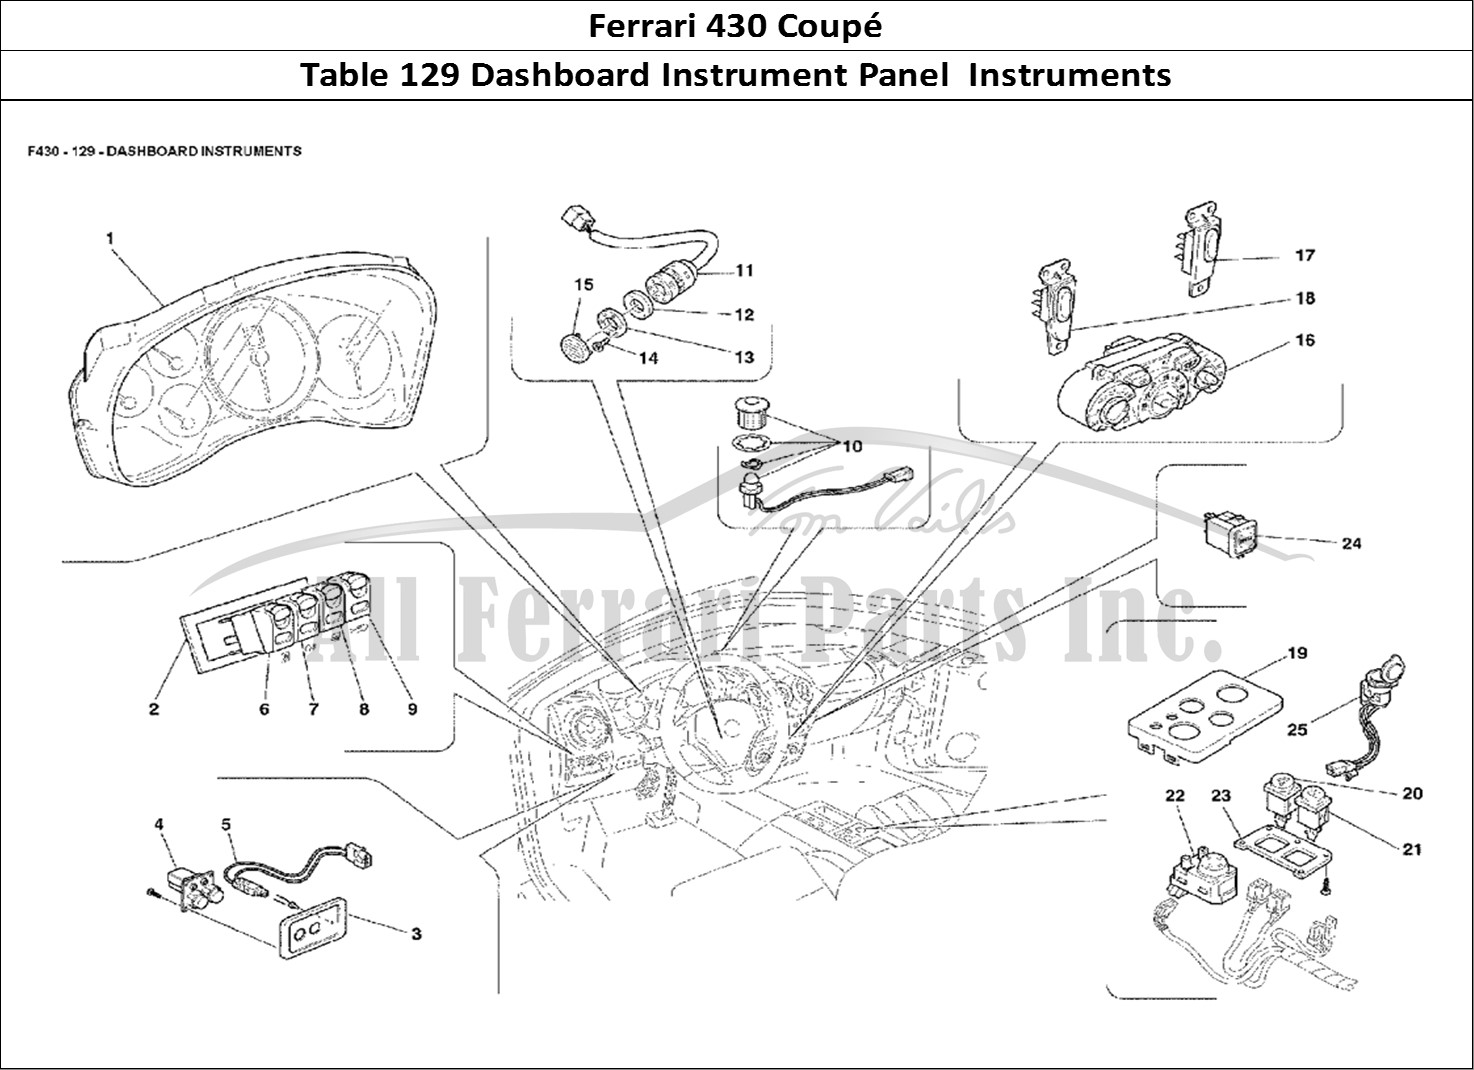 Ferrari Parts Ferrari 430 Coup Page 129 Dashboard Instruments